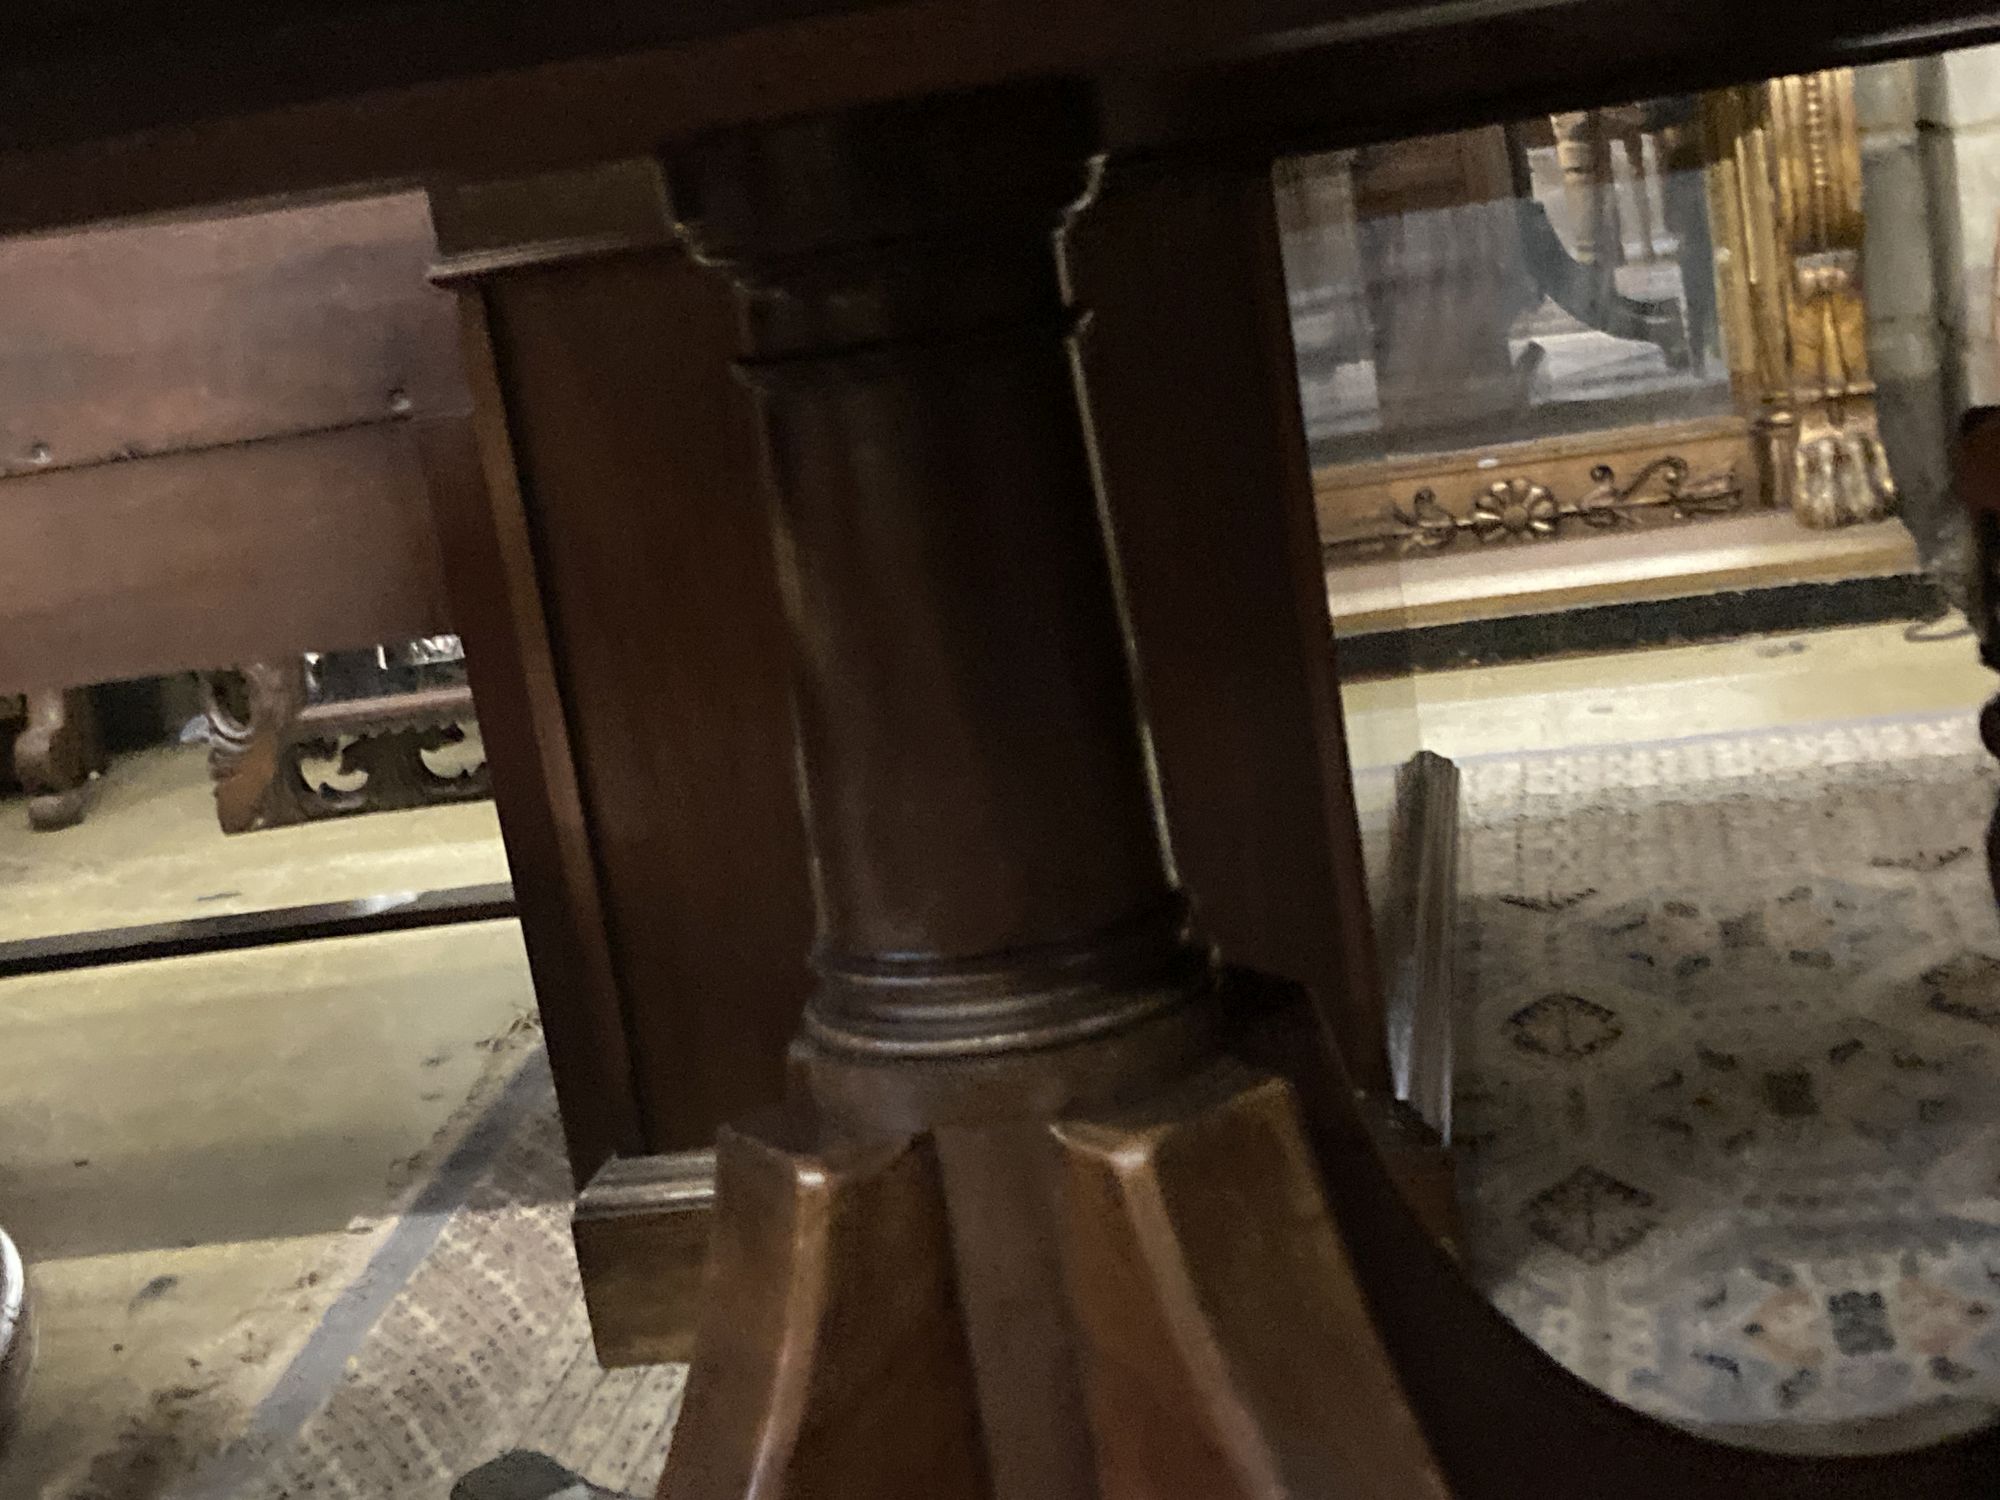 A George III oval mahogany tilt top dining table, width 158cm depth 120cm height 74cm